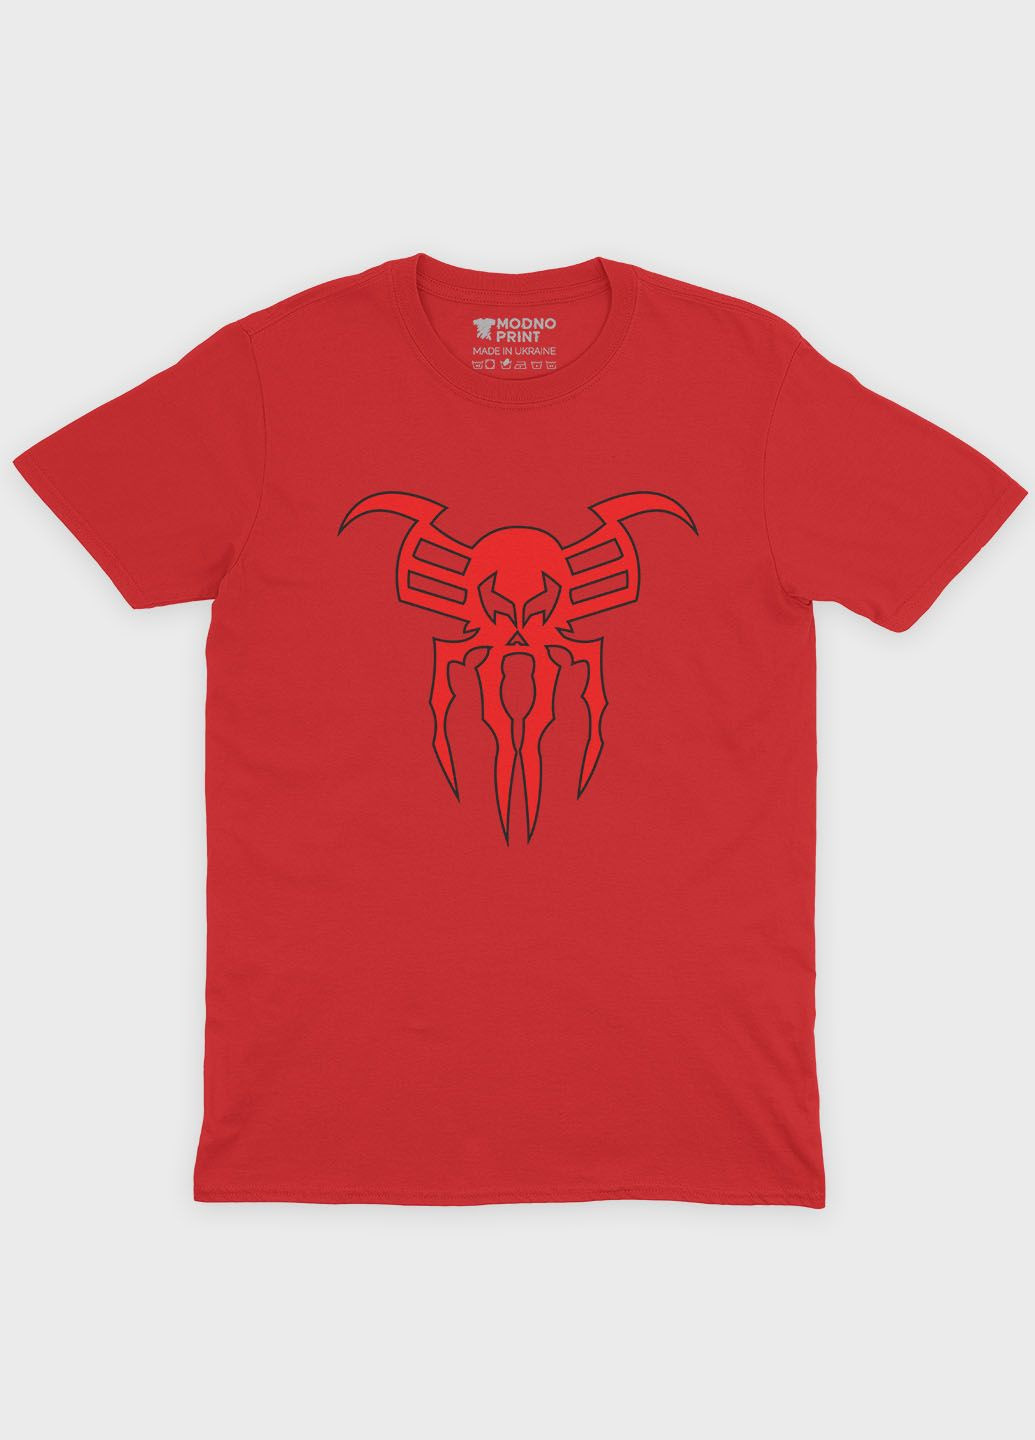 Червона демісезонна футболка для хлопчика з принтом супергероя - людина-павук (ts001-1-sre-006-014-110-b) Modno